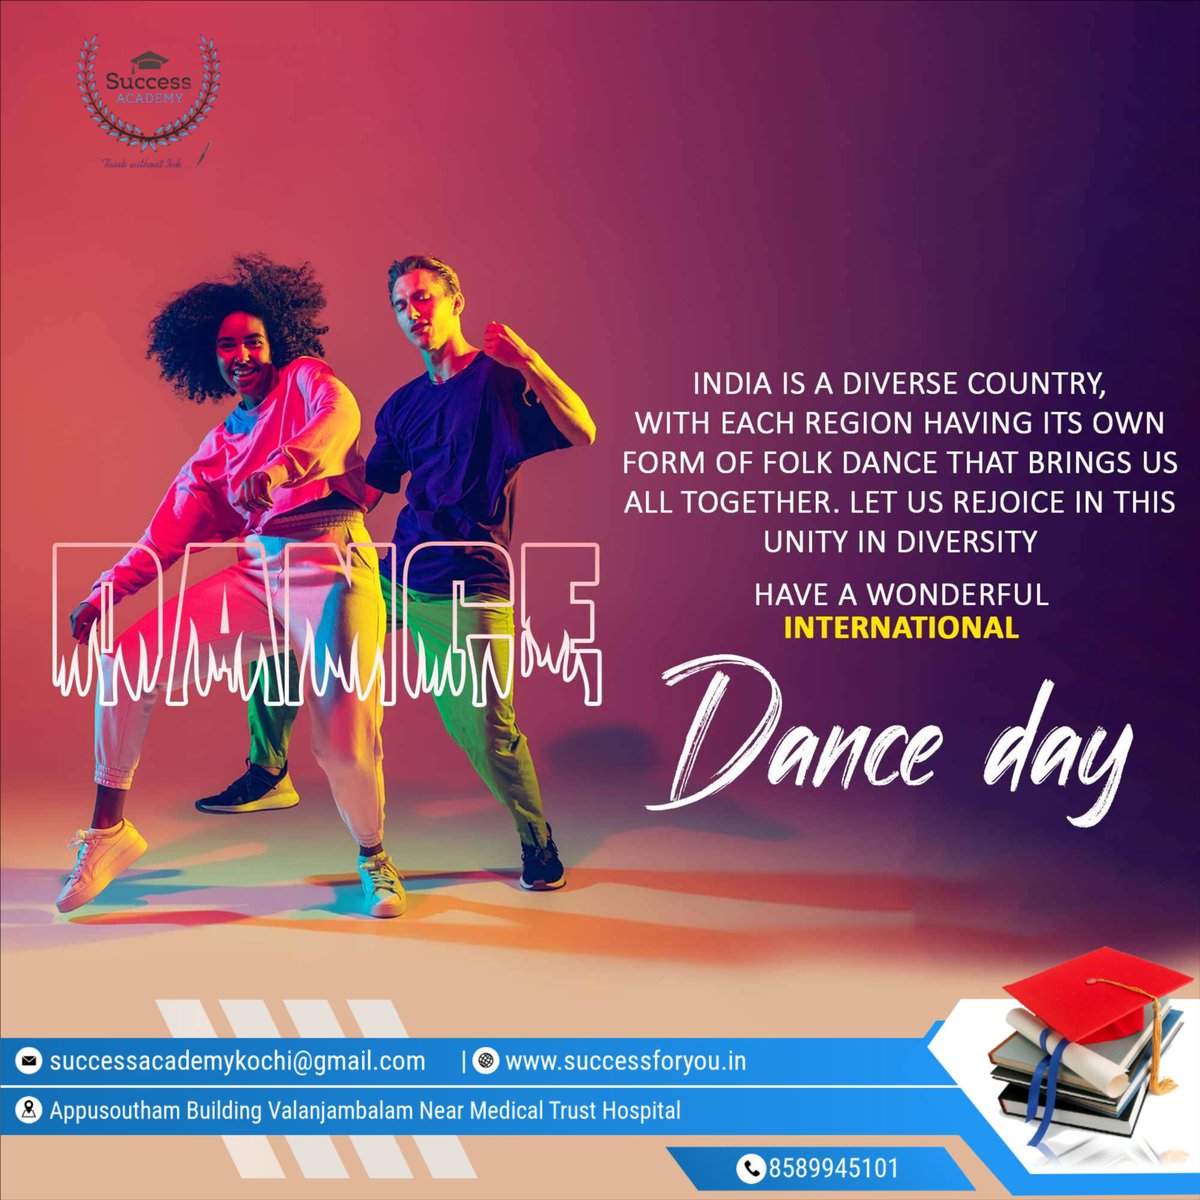 #InternationalDanceDay #DanceDay #WorldDanceDay #DanceCelebration #DanceCulture #GlobalDance #DanceCommunity #DanceIsArt #CelebrateDance #MoveYourBody #DancePassion #UnityThroughDance #LoveForDance #DanceInspiration #DanceTogether  #SSCCoaching #BankCoaching #SuccessAcademyKochi